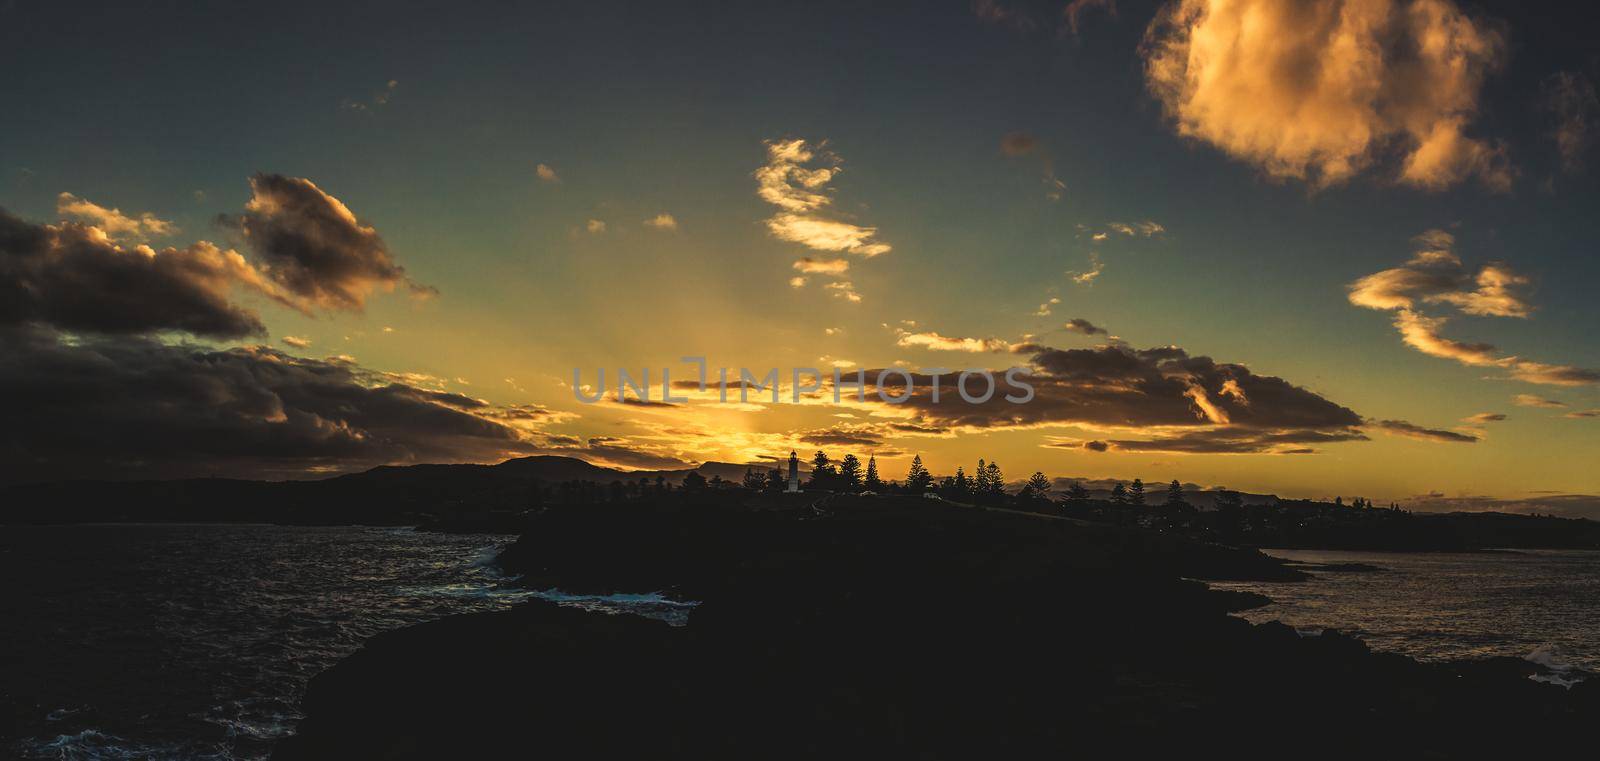 Kiama Lighthouse at sunset, Kiama, New South Wales, Australia